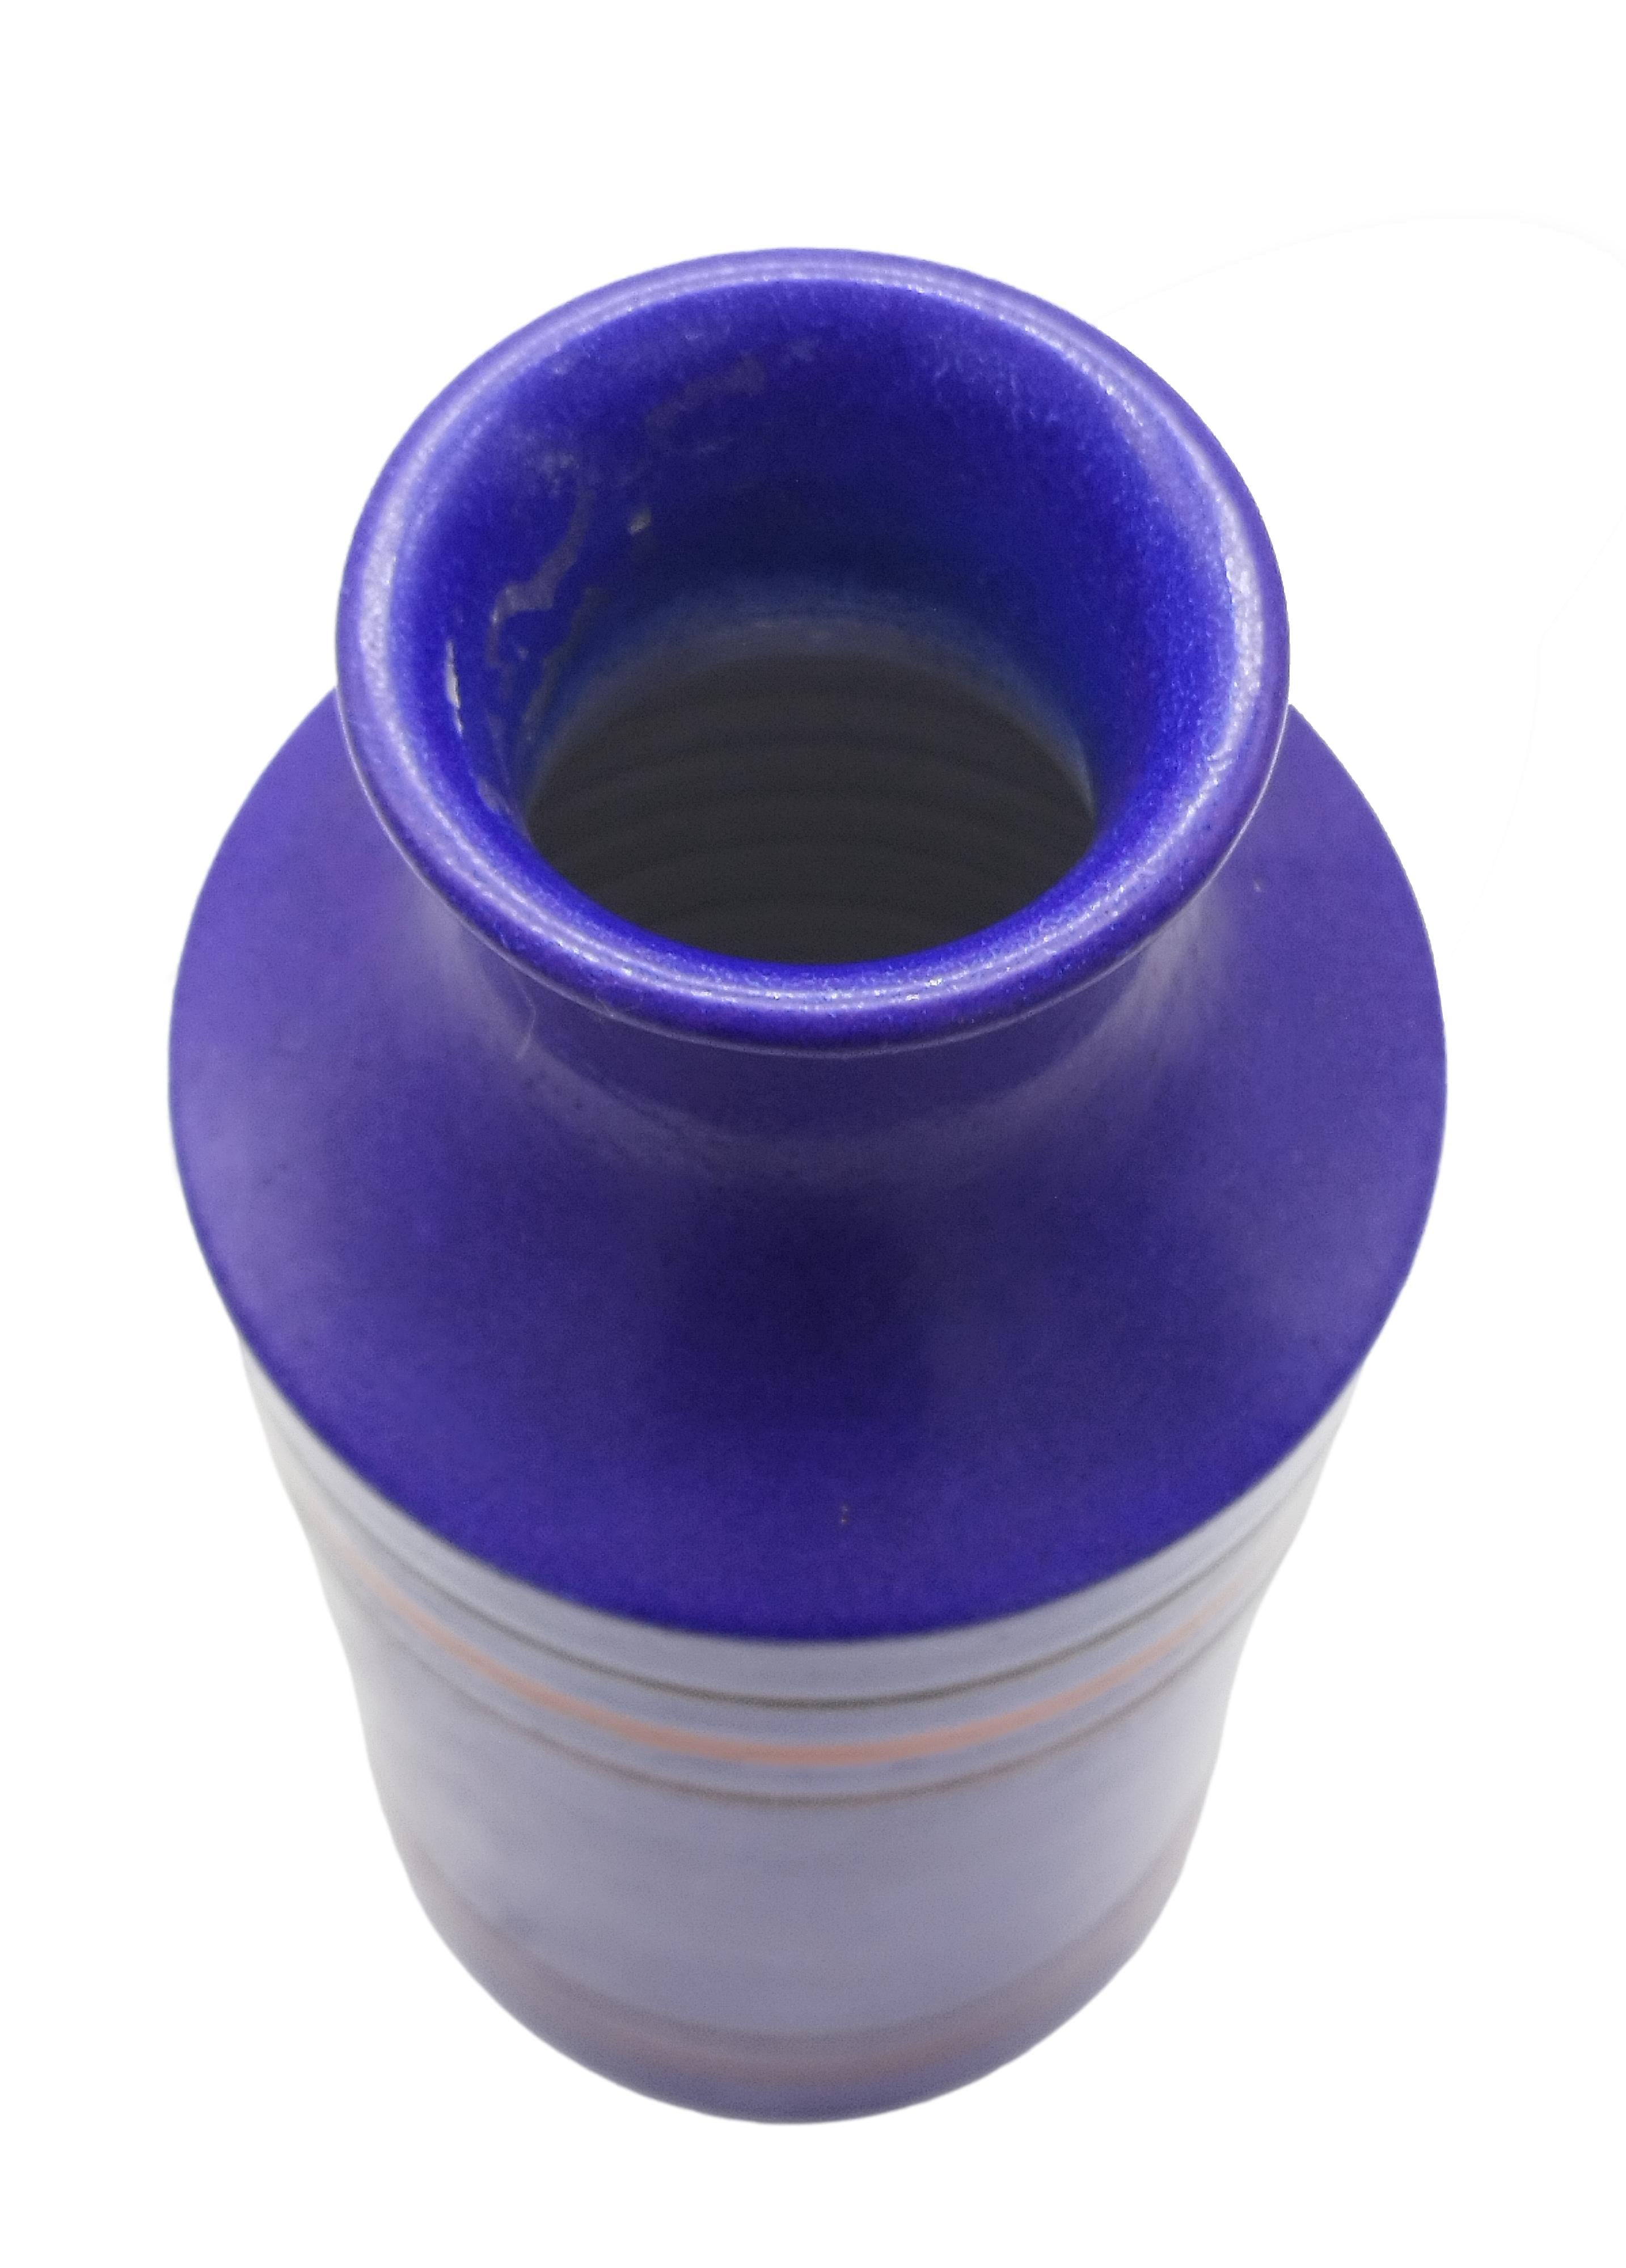 Mid-Century Modern Aldo Londi for Bitossi Glazed Purple Ceramic Vase, Italy 1960s For Sale